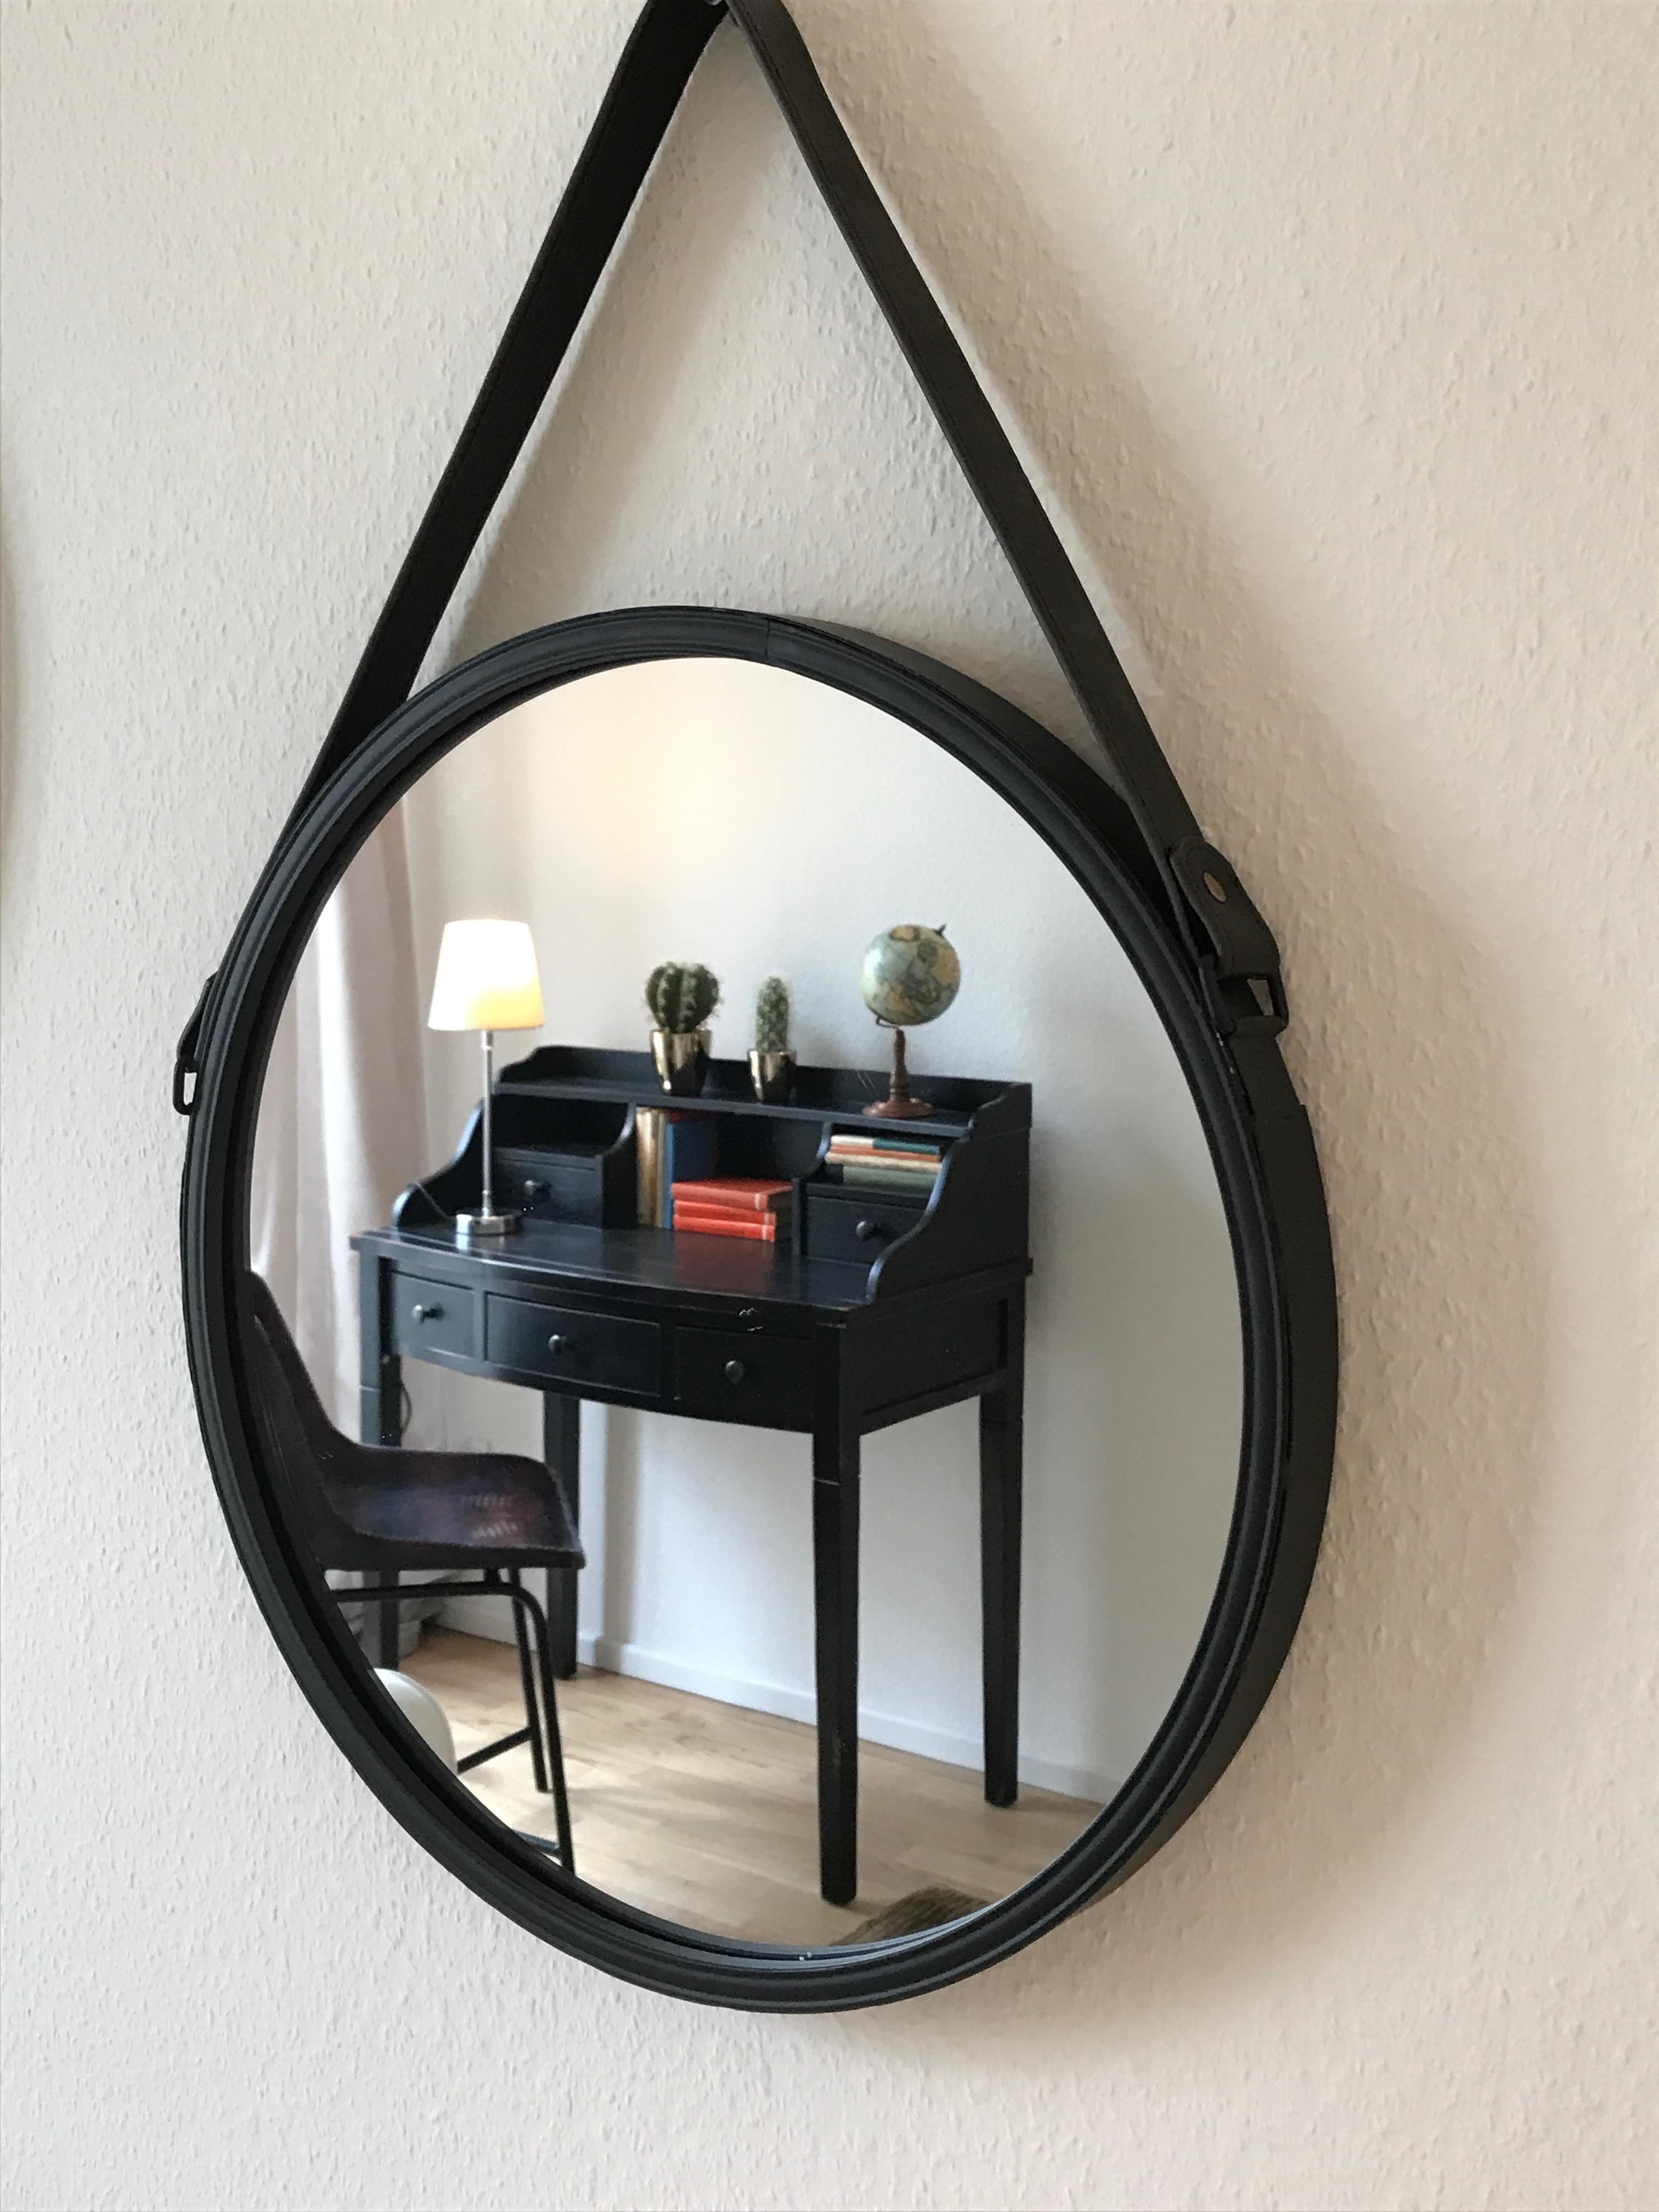 Spiegel und Konsole #runderspiegel #schwarzekonsole ©Miracle Room